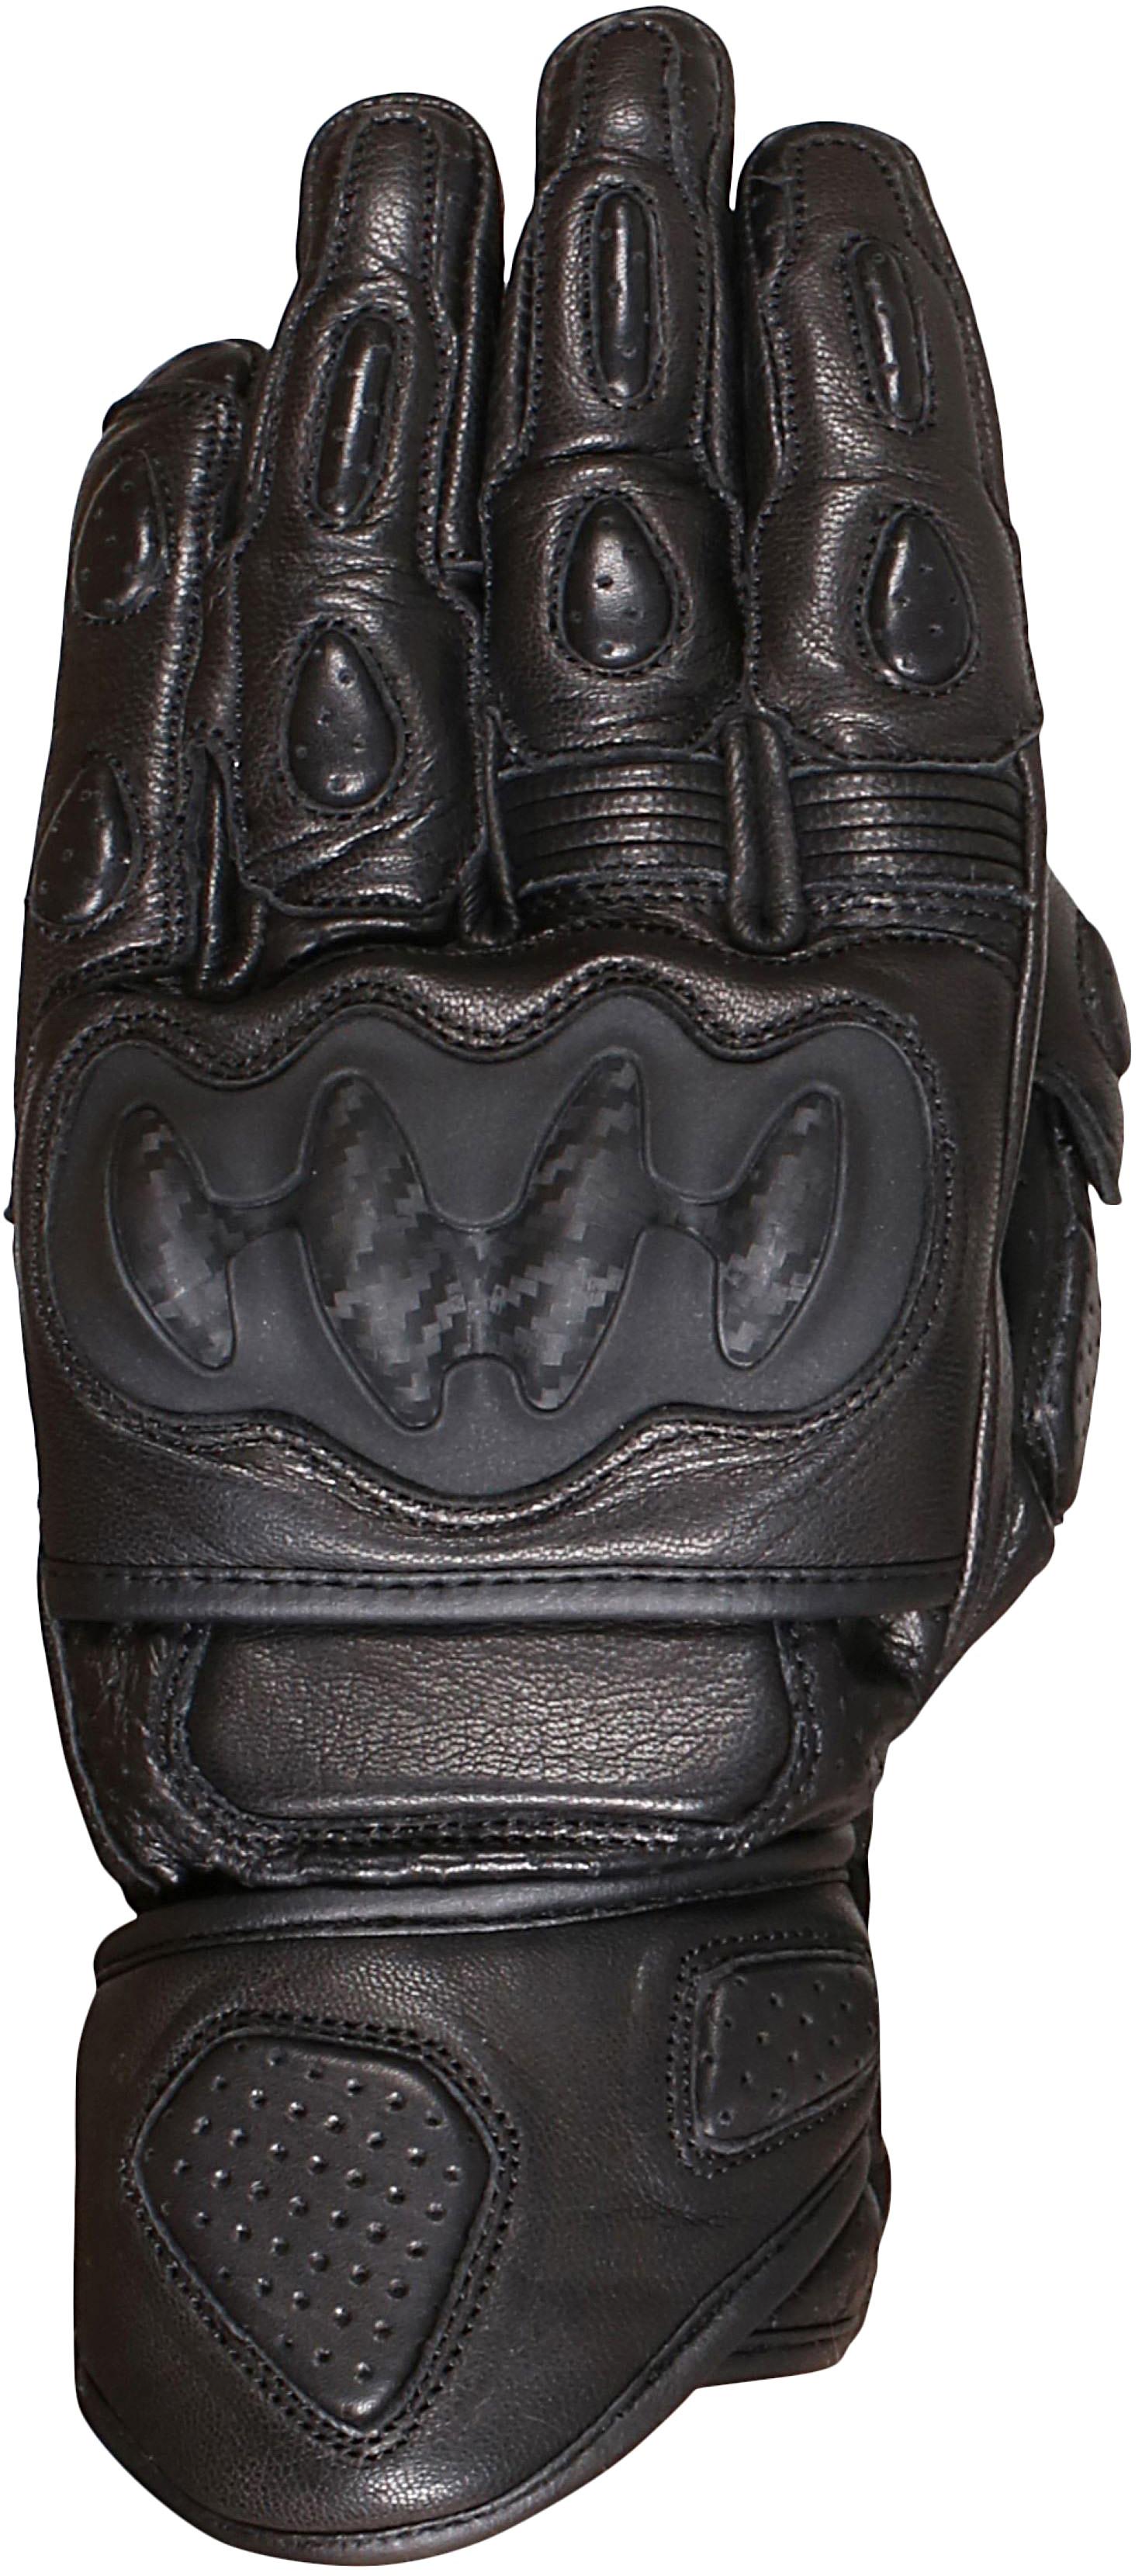 Weise Apex Motorcycle Gloves - Black, L